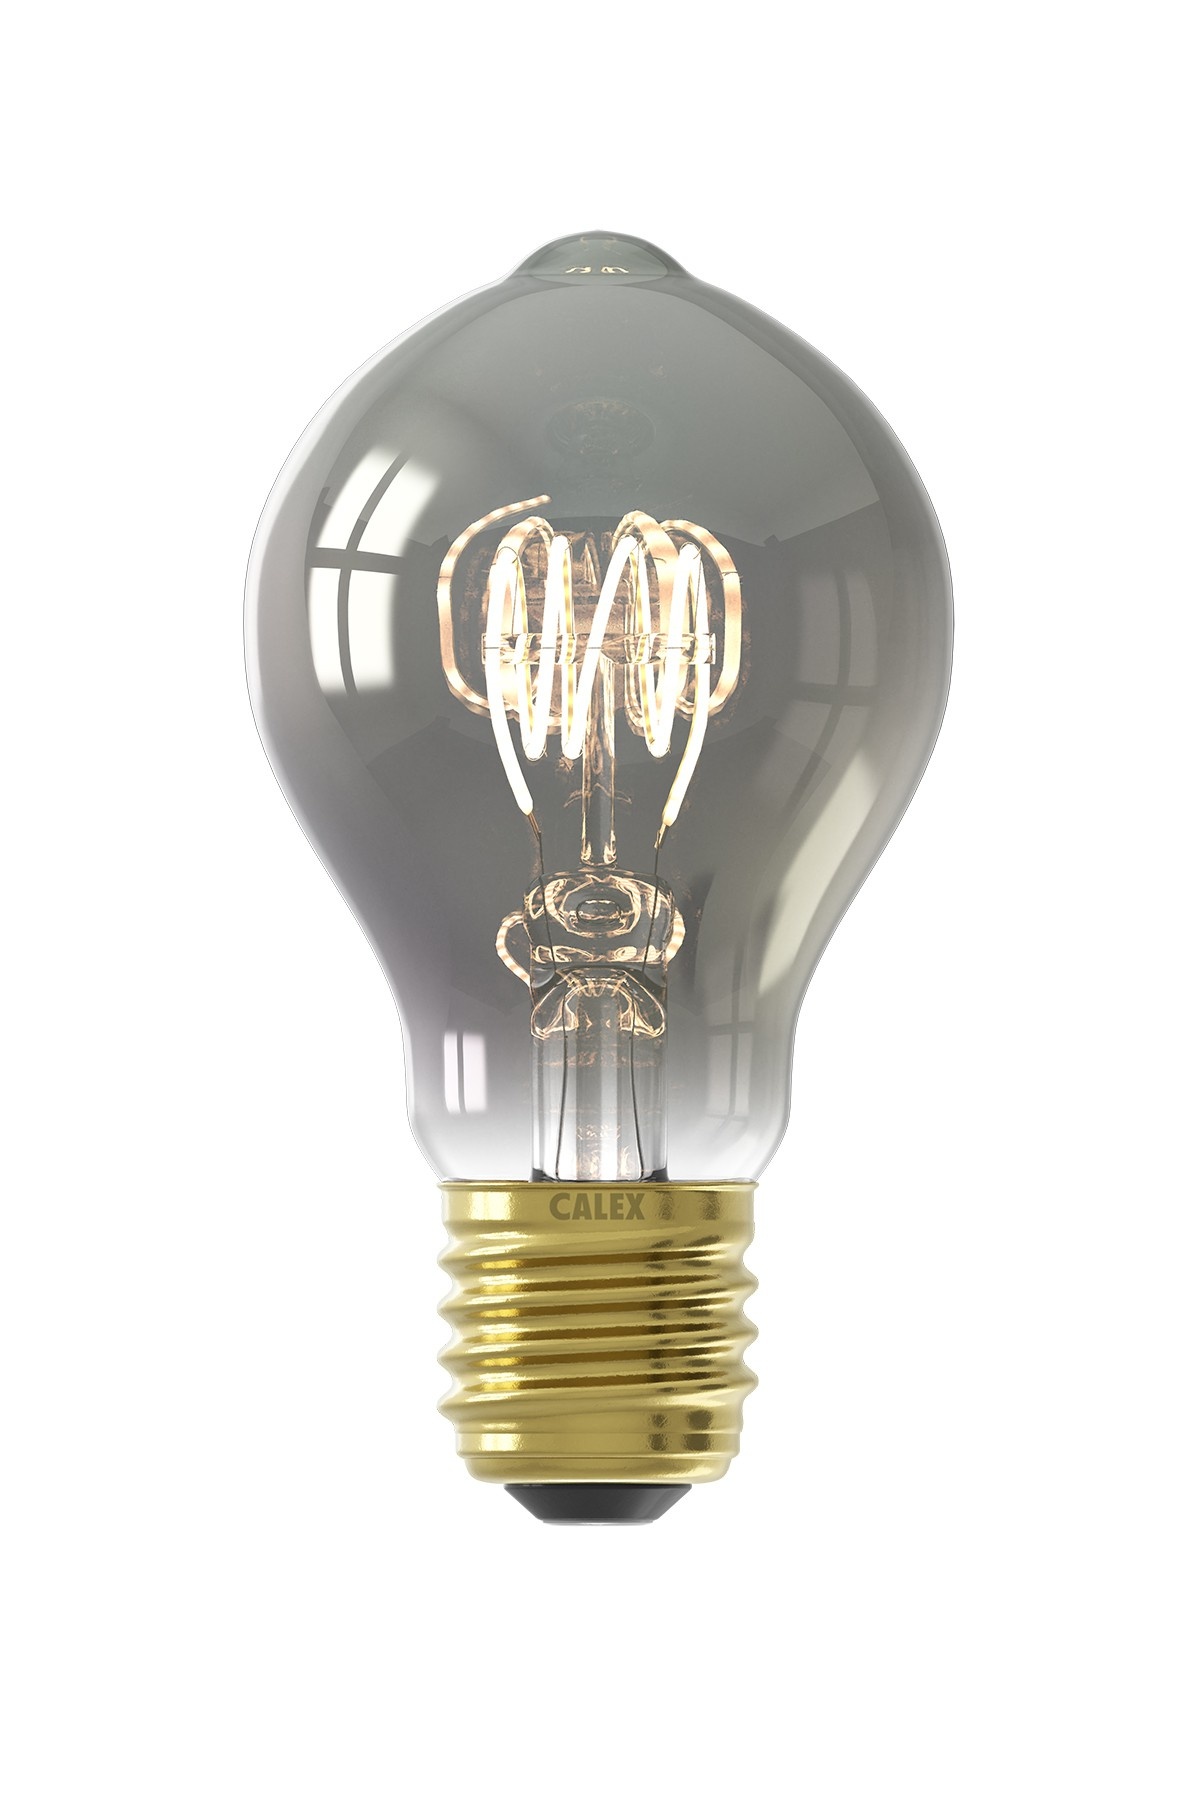 Uitgaand hanger opschorten Flex LED lamp peer-model Titanium Calex (A60DR E27 4W) - Kynda Light